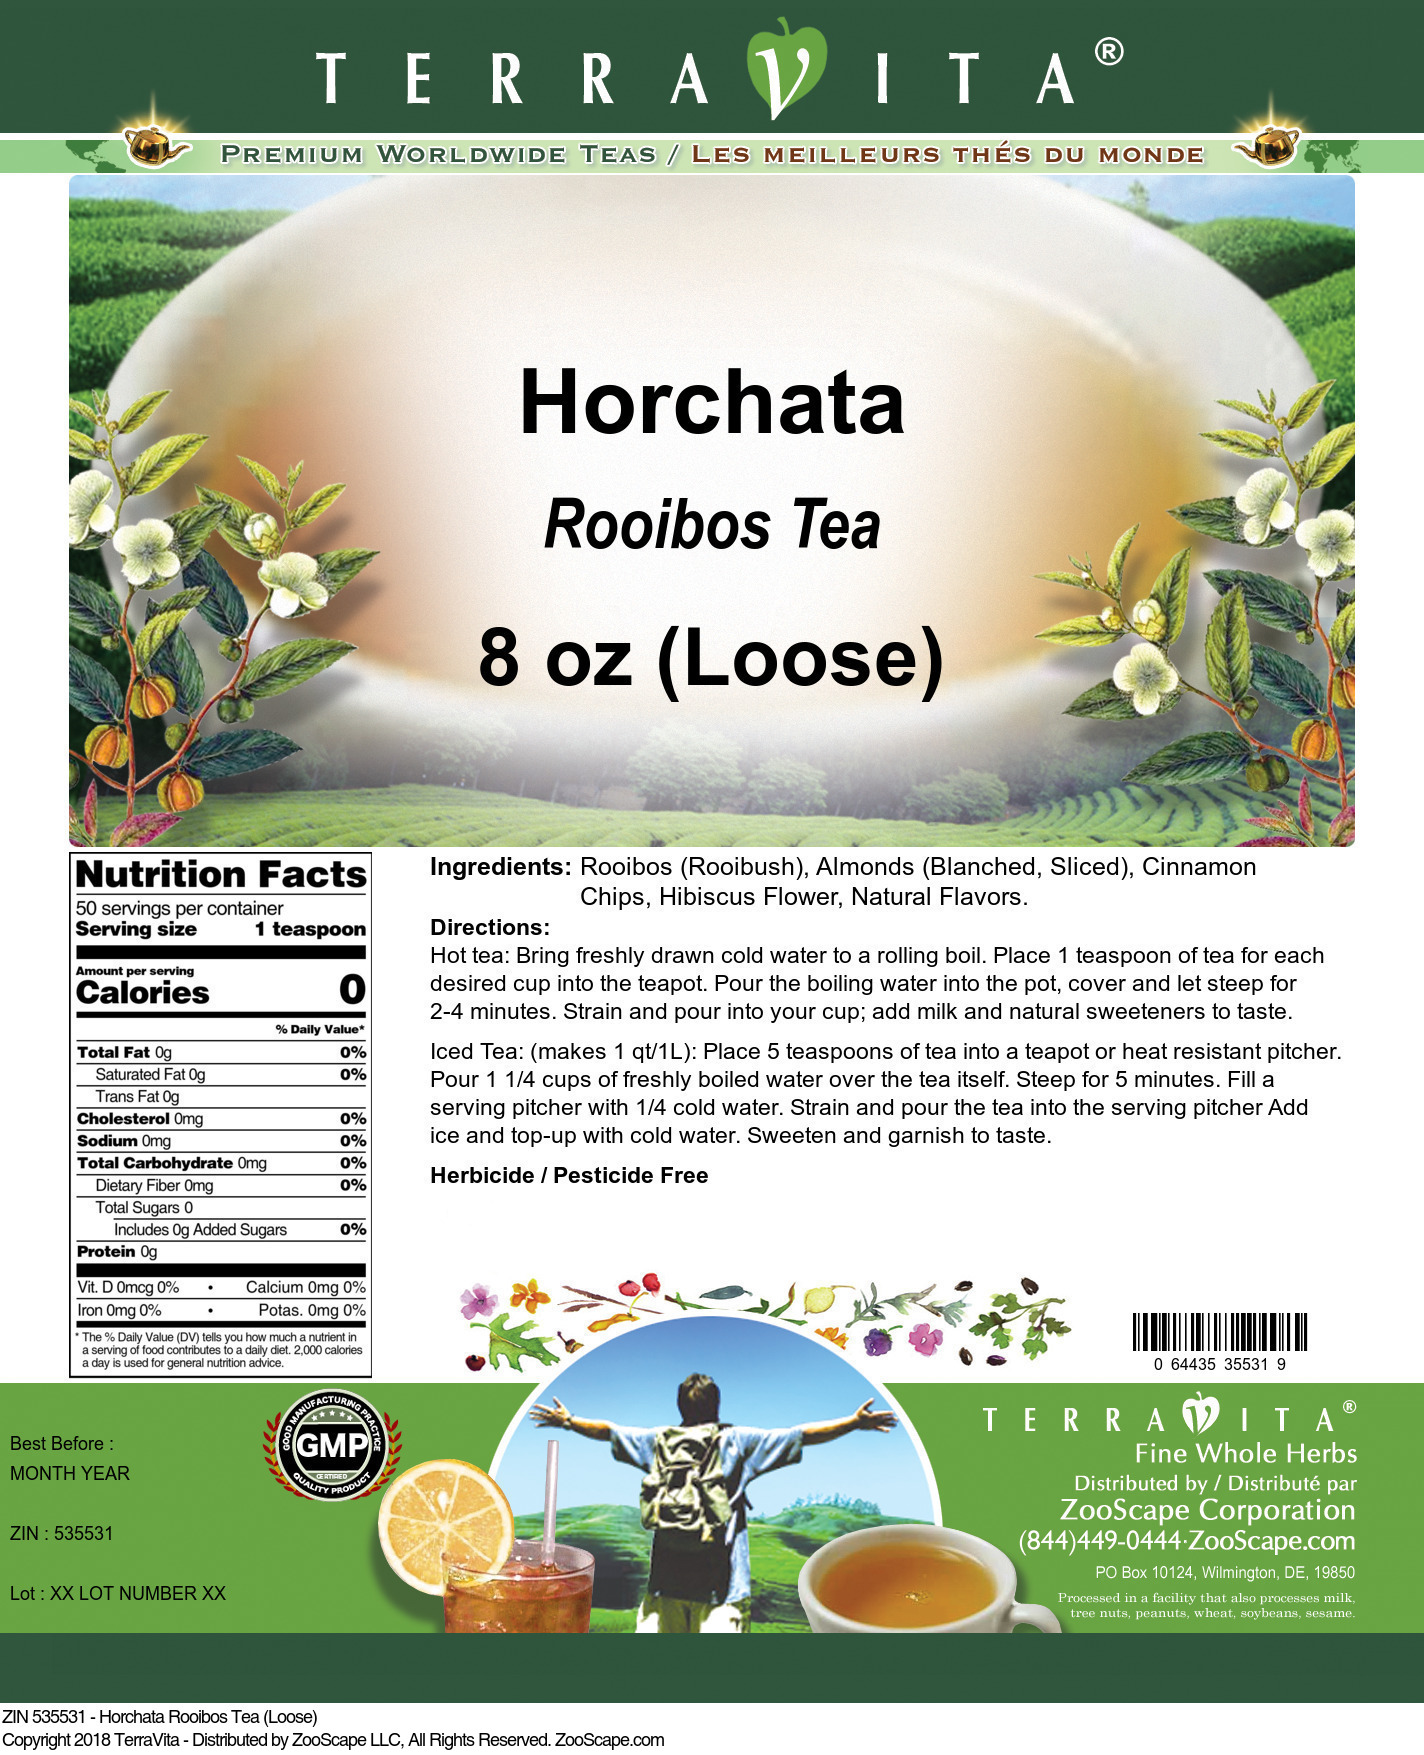 Horchata Rooibos Tea (Loose) - Label